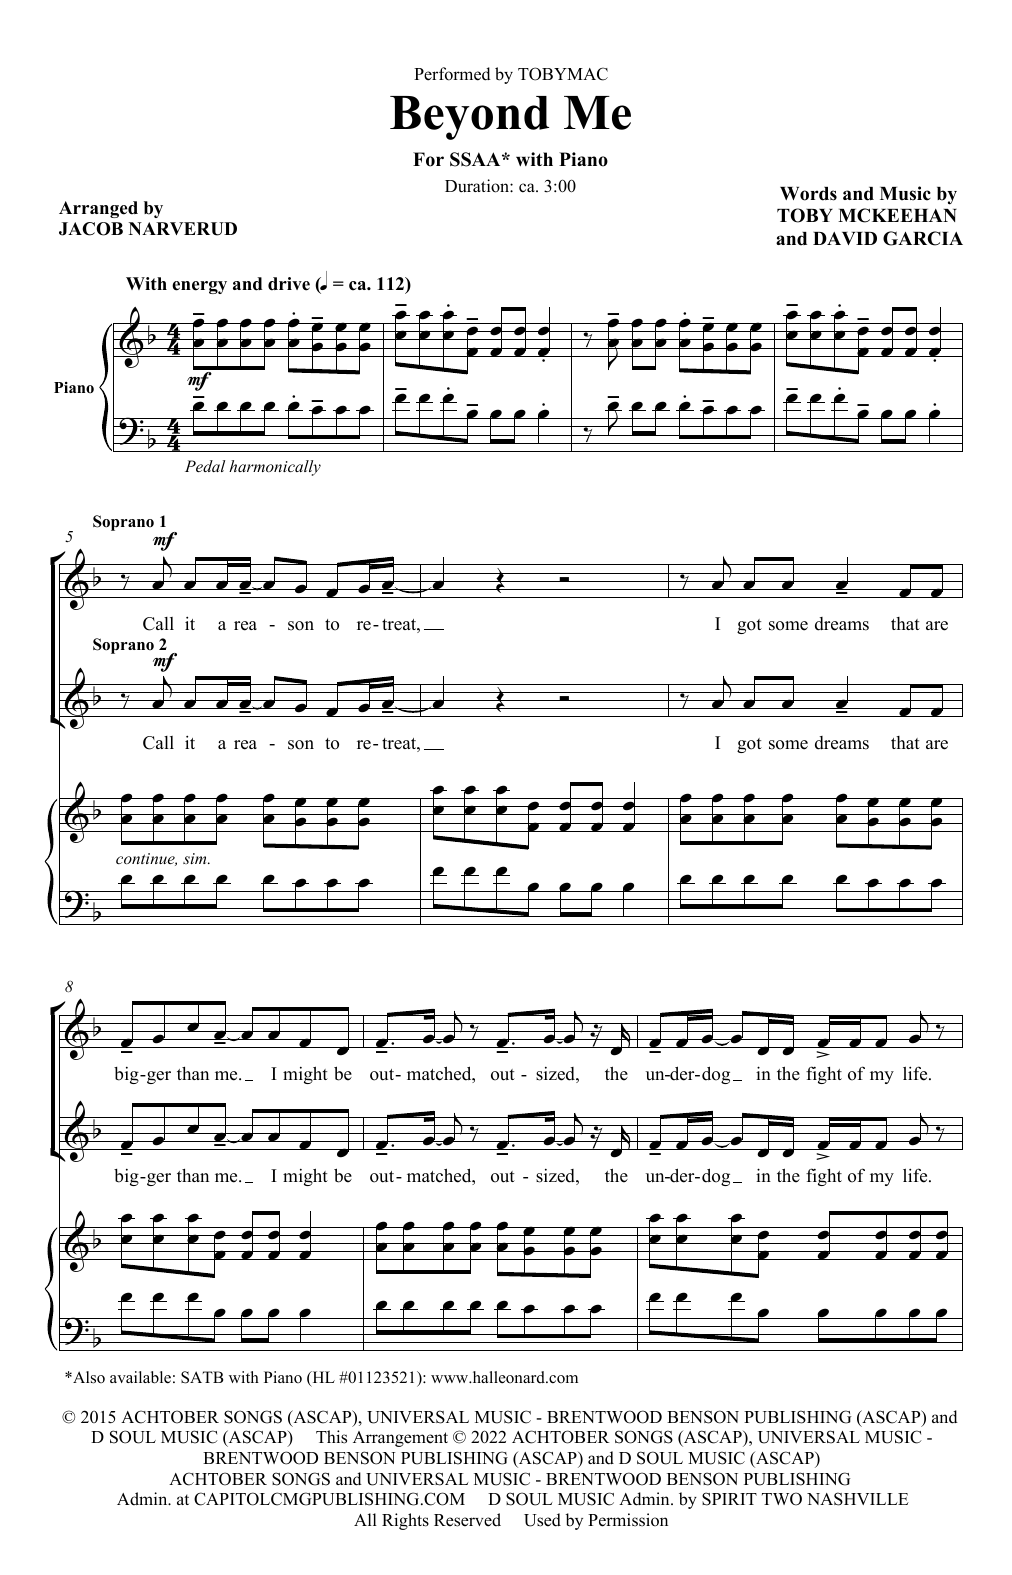 tobyMac Beyond Me (arr. Jacob Narverud) Sheet Music Notes & Chords for SATB Choir - Download or Print PDF